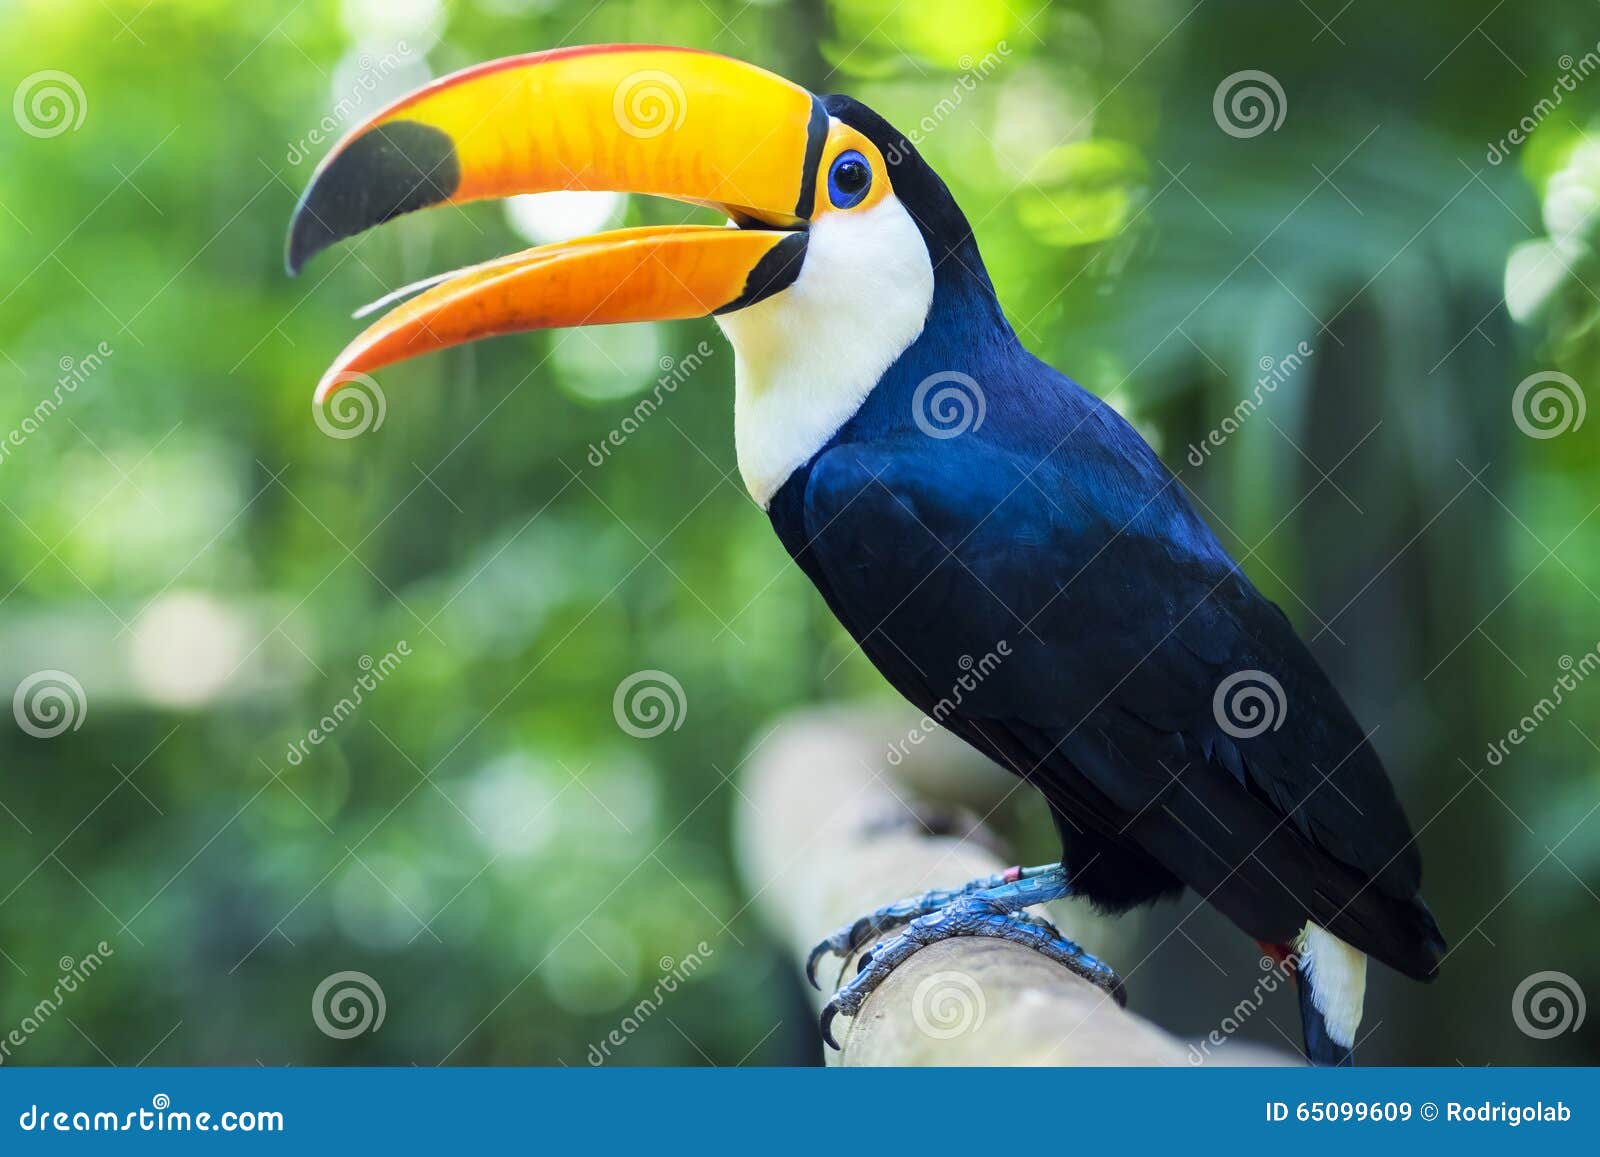 exotic toucan bird in natural setting, foz do iguacu, brazil